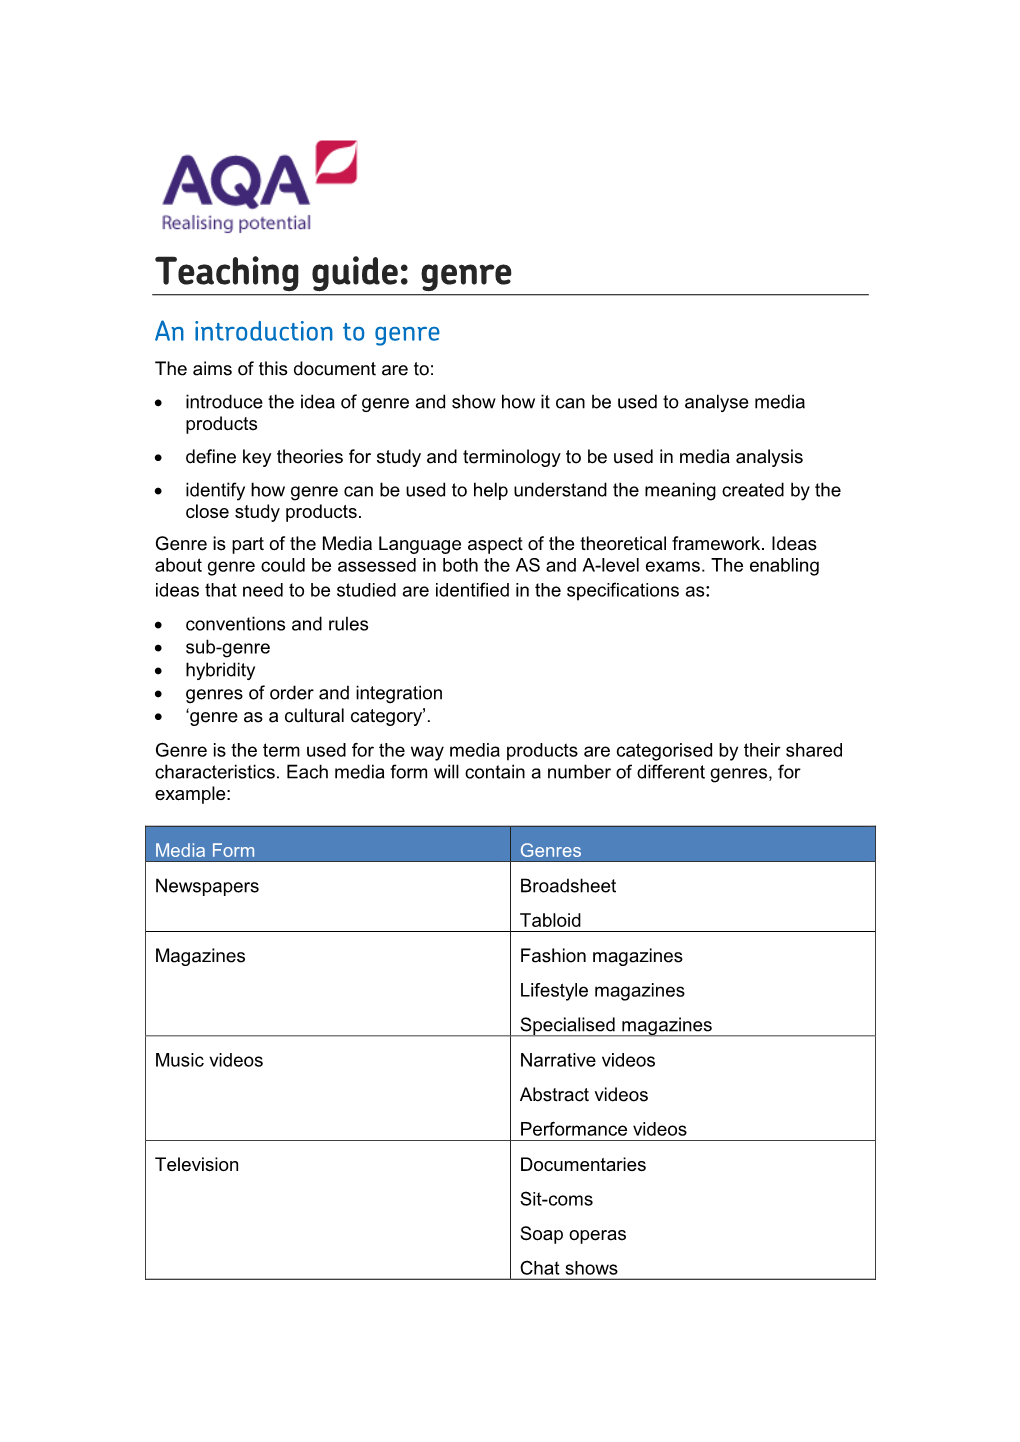 Teaching Guide: Genre